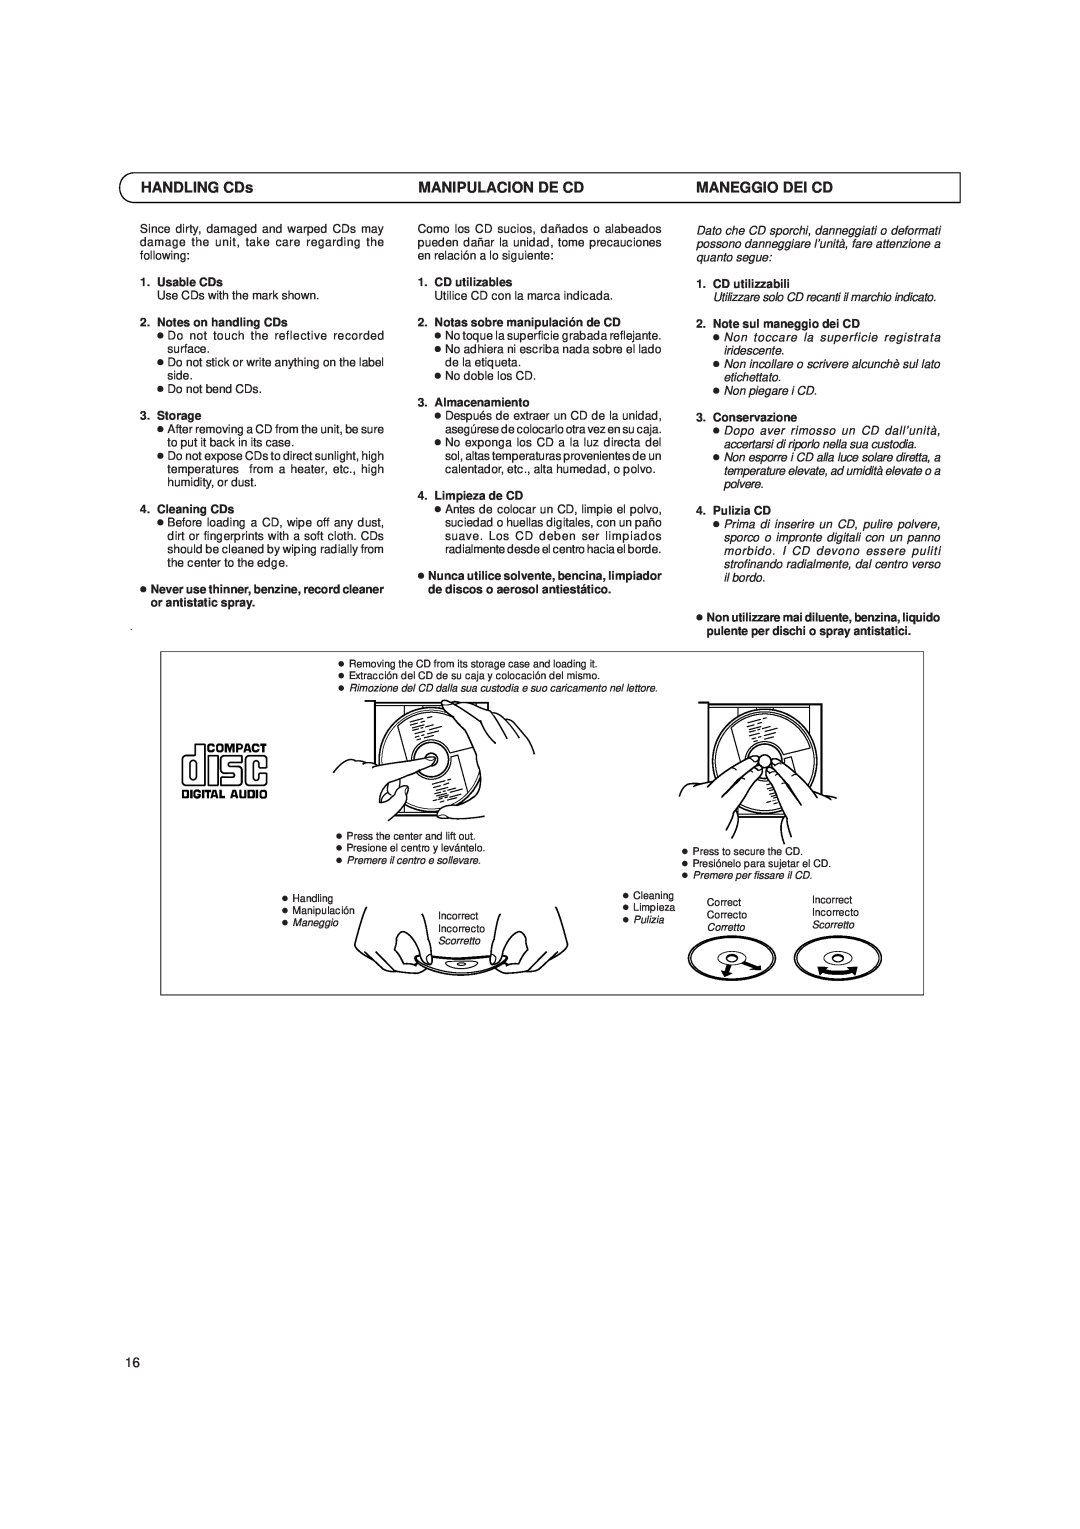 JVC UX-T151, UX-T150 manual HANDLING CDs, Manipulacion De Cd, Maneggio Dei Cd 